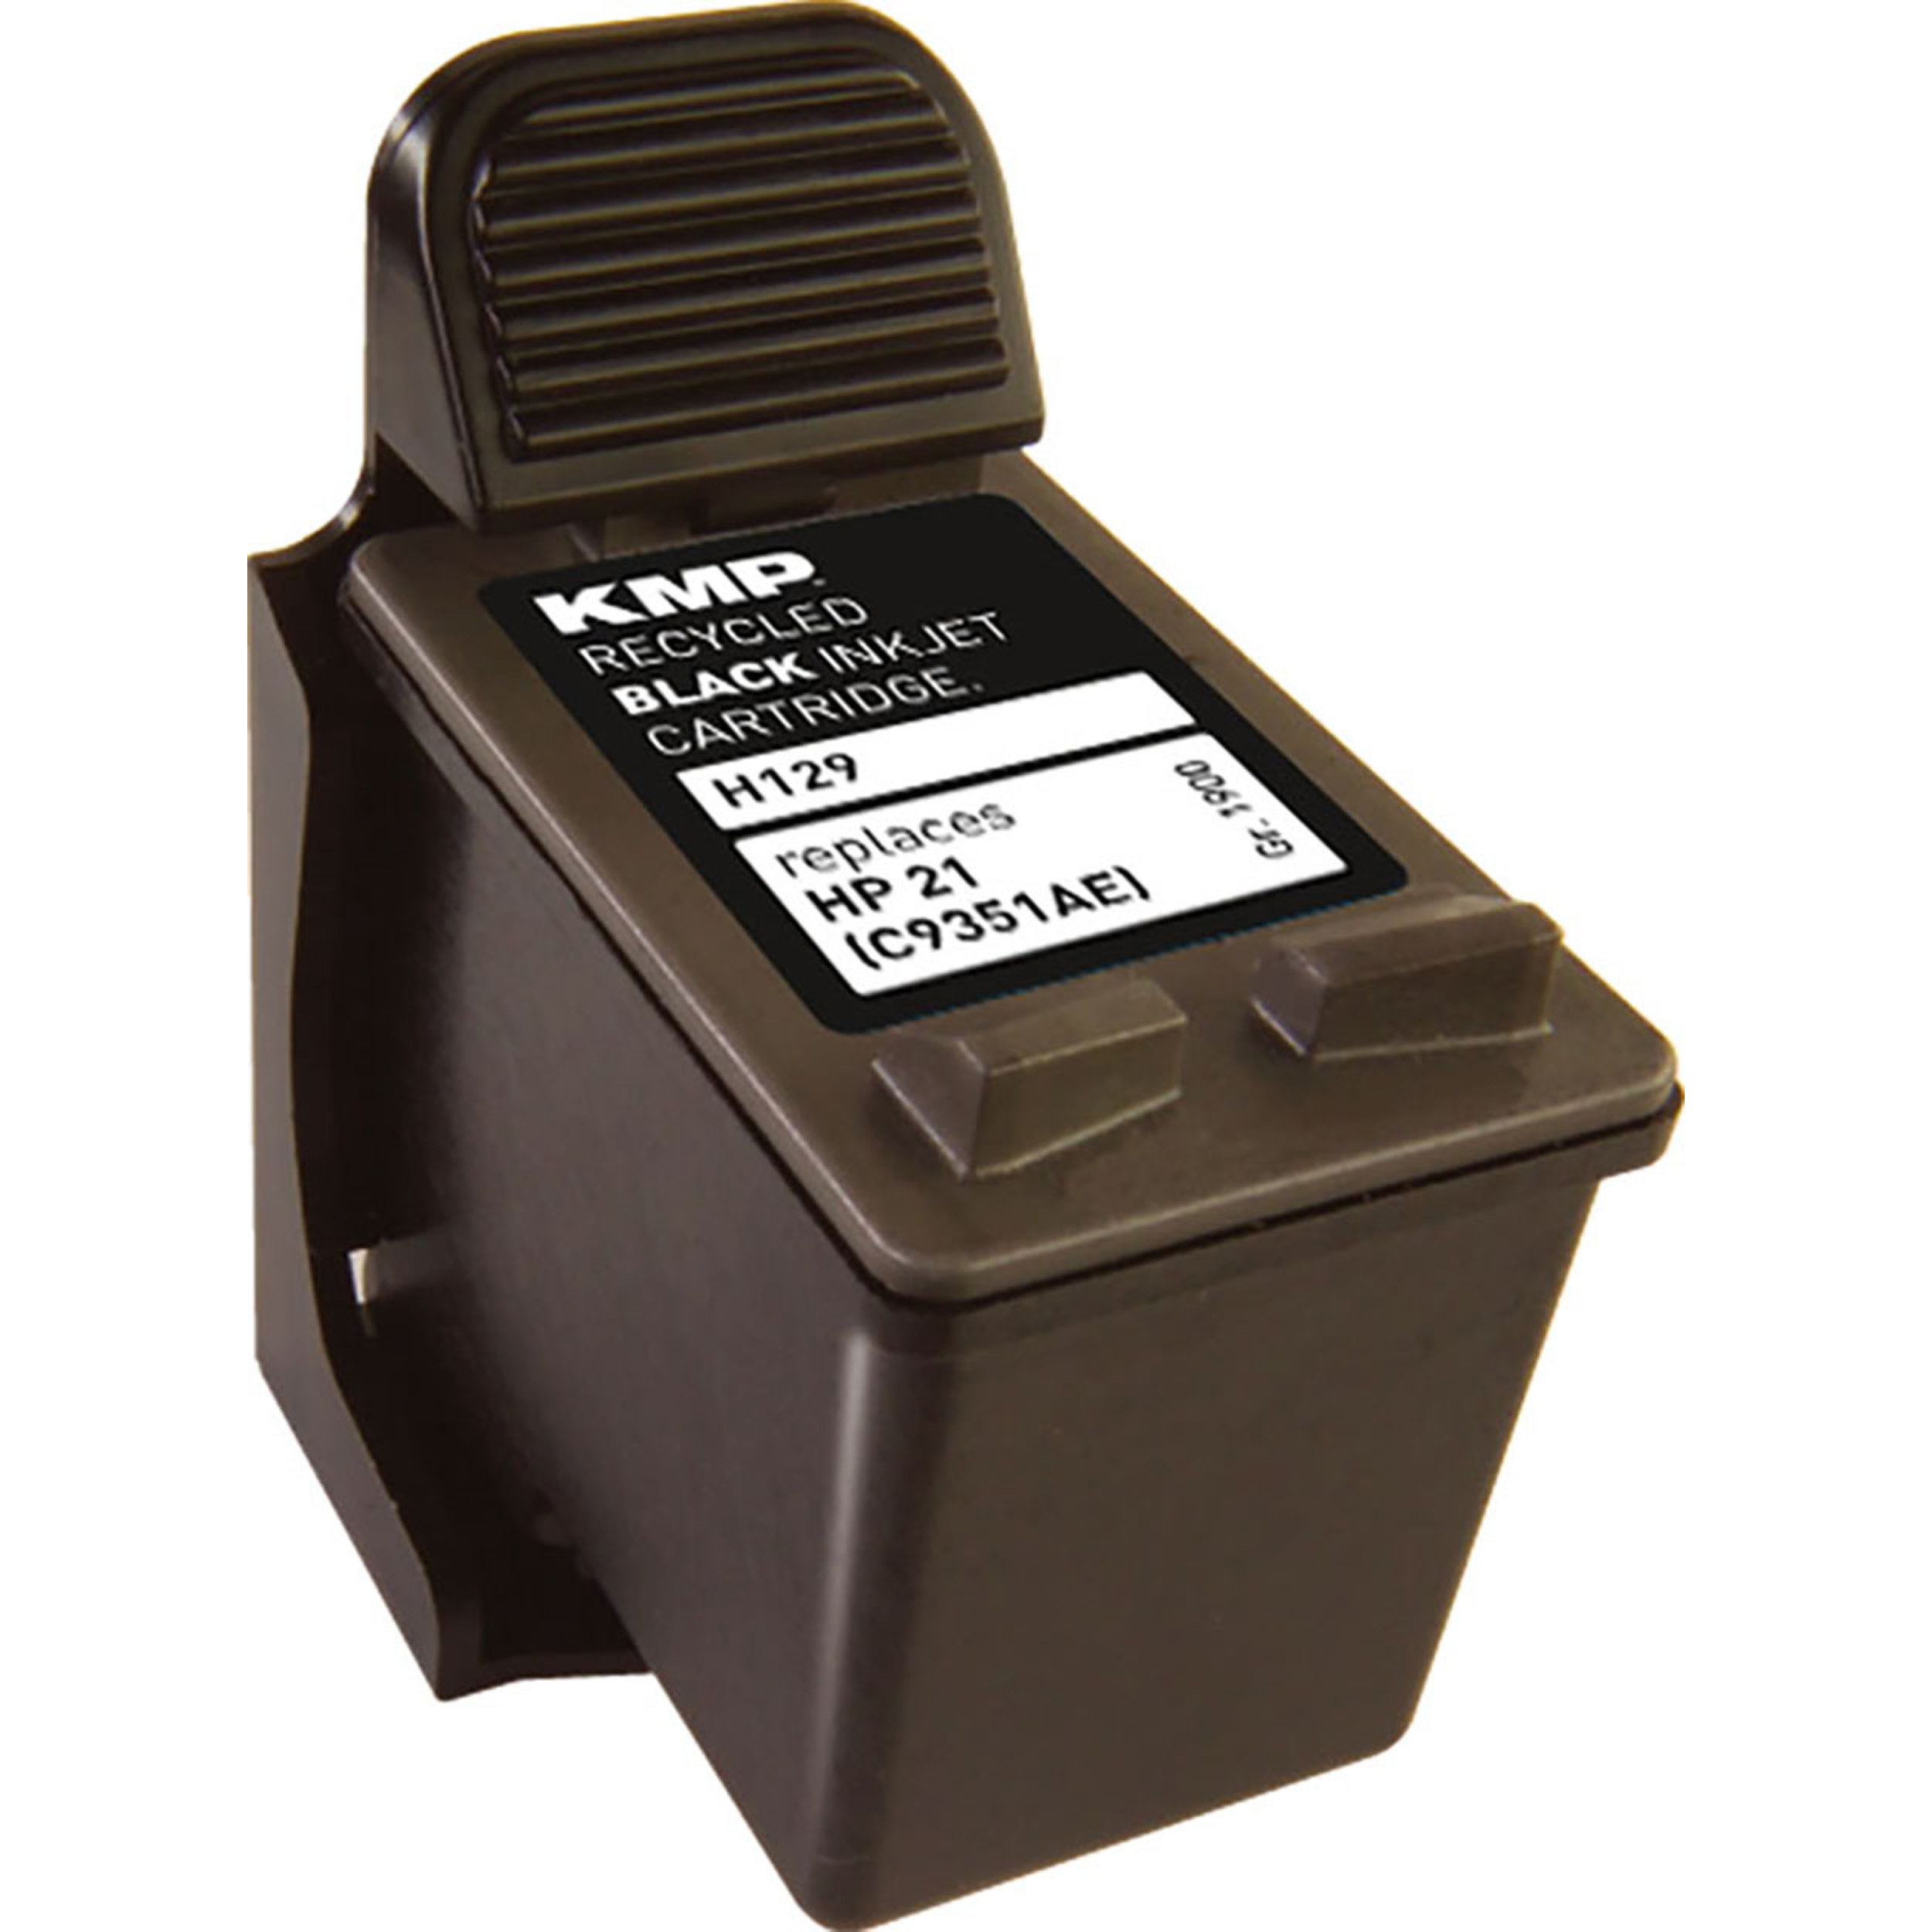 KMP Tintenpatrone HP Cartridge Black für (C9351AE) Ink (C9351AE) 21 black